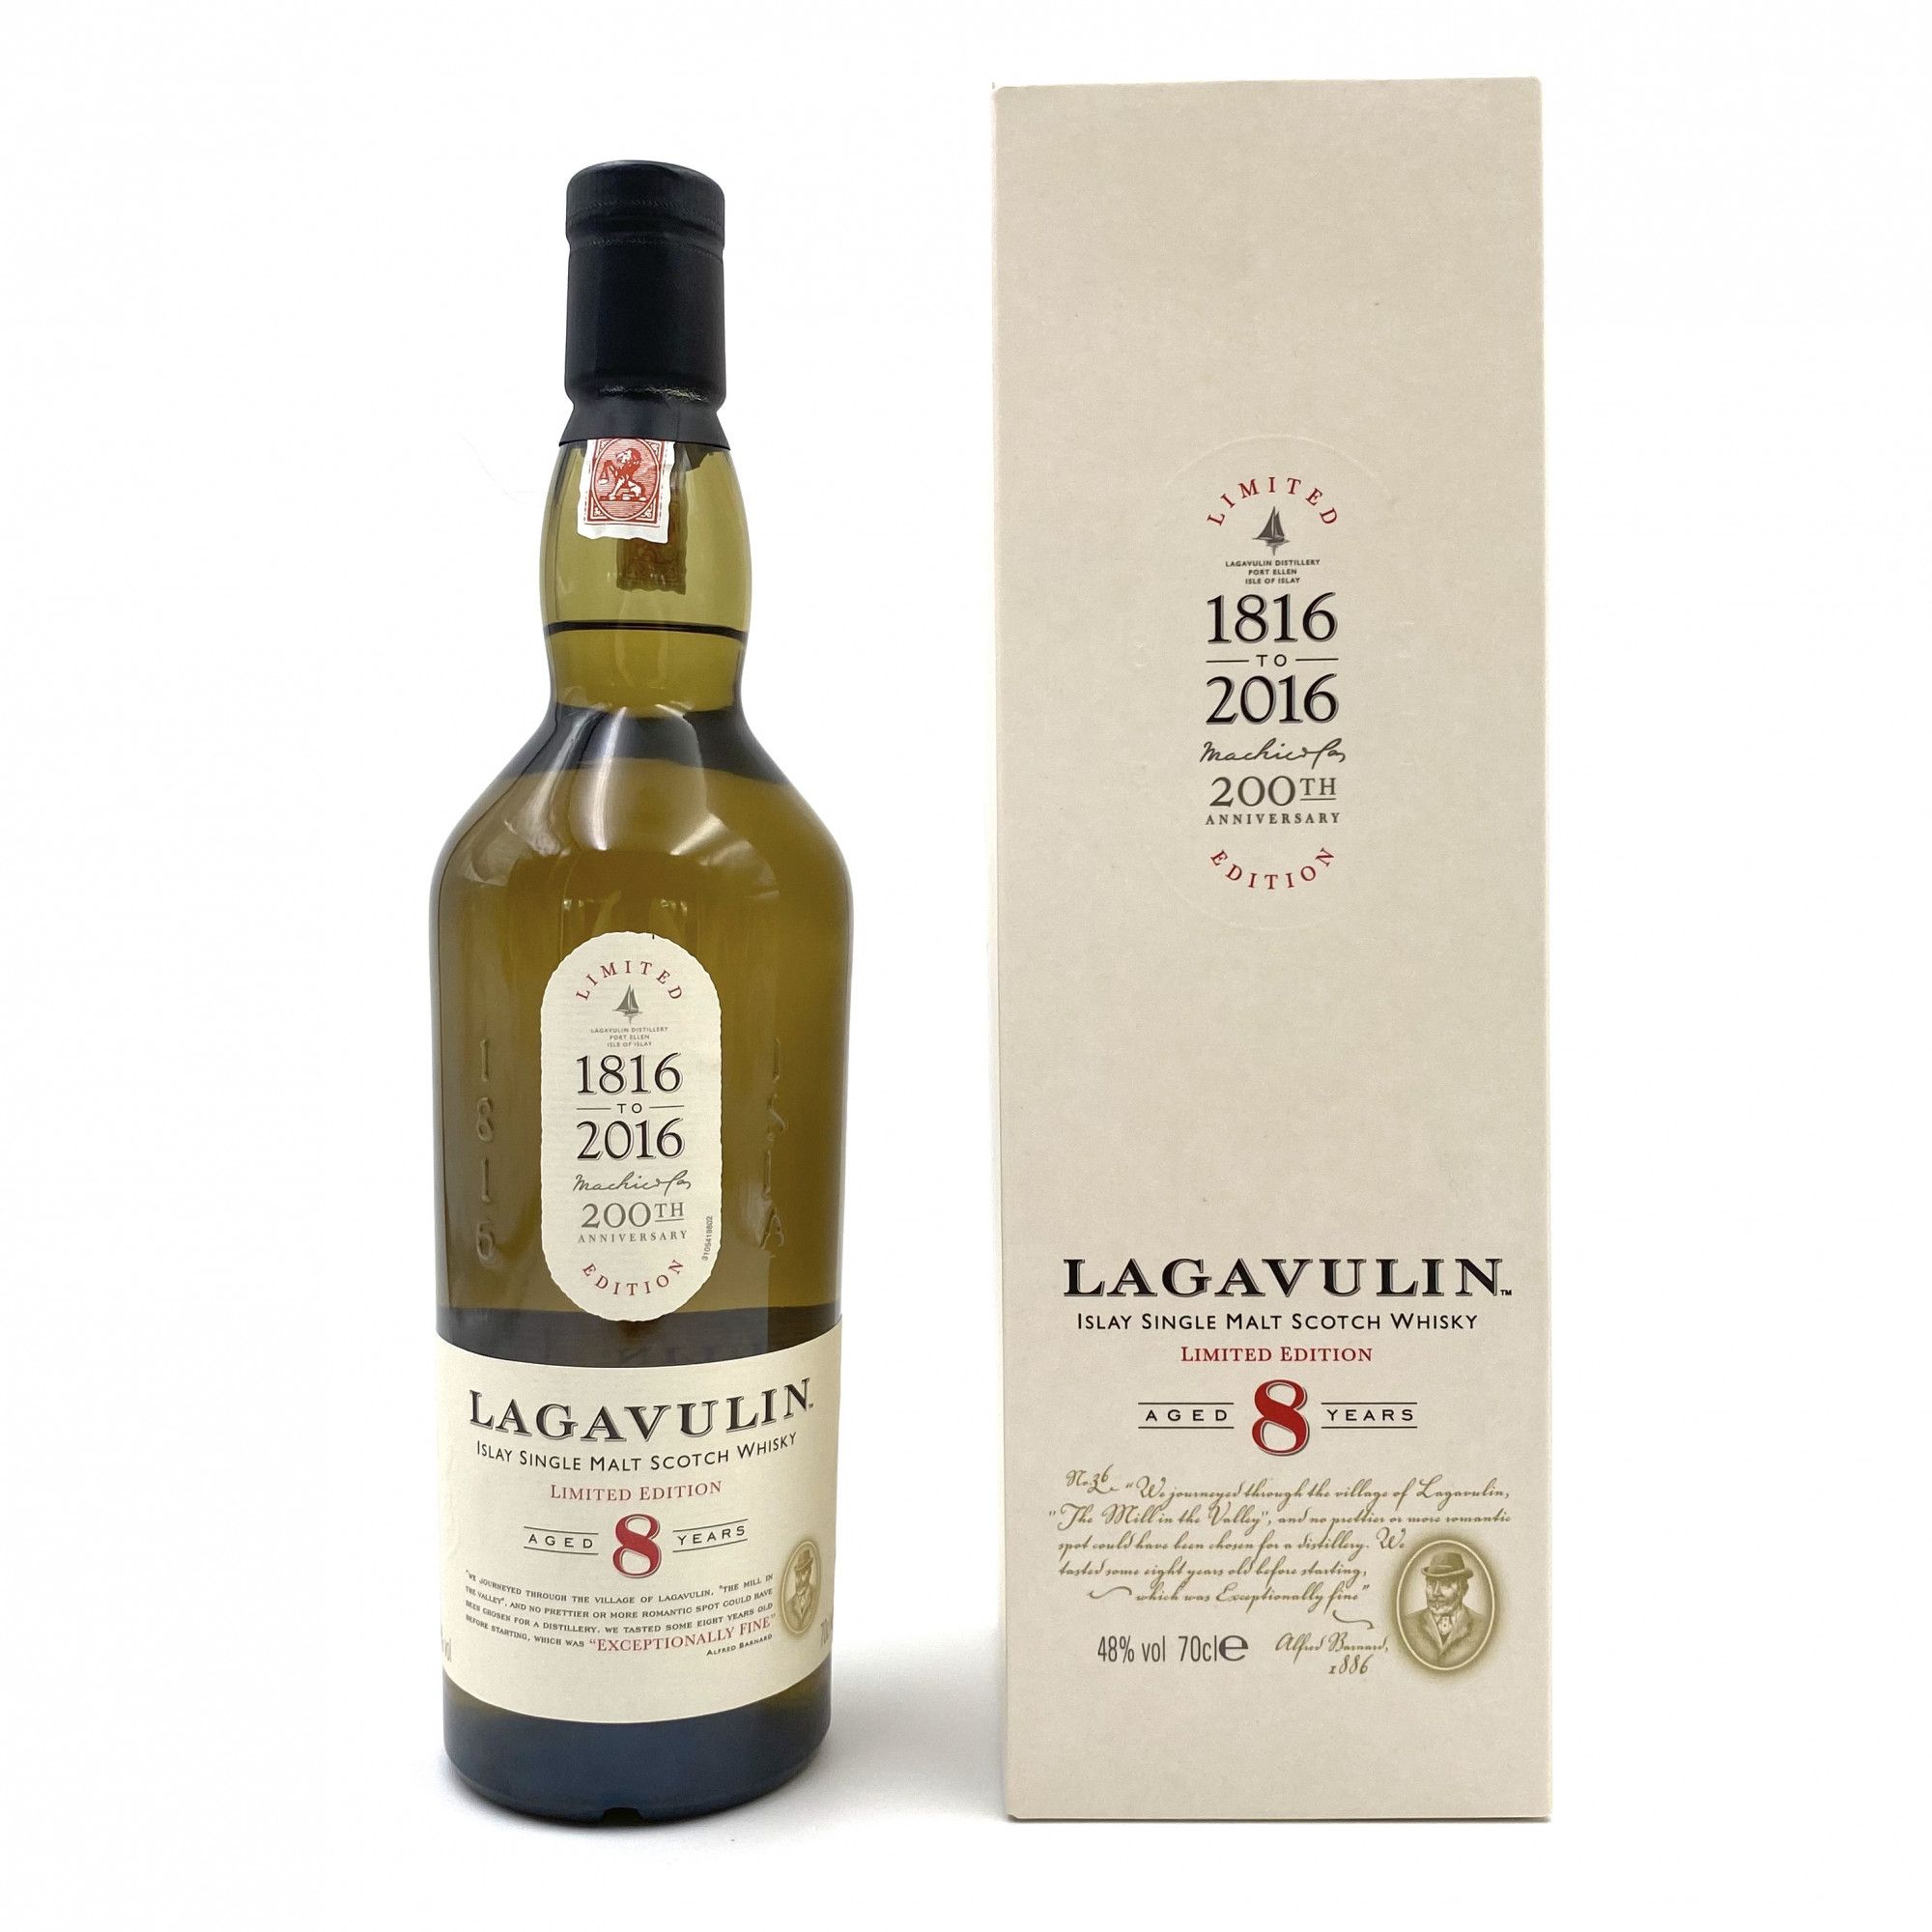 Whisky Lagavulin 200 anniversary 8 years Single Malt Scotch Limited Edition 48°, 6 x 70cl OC